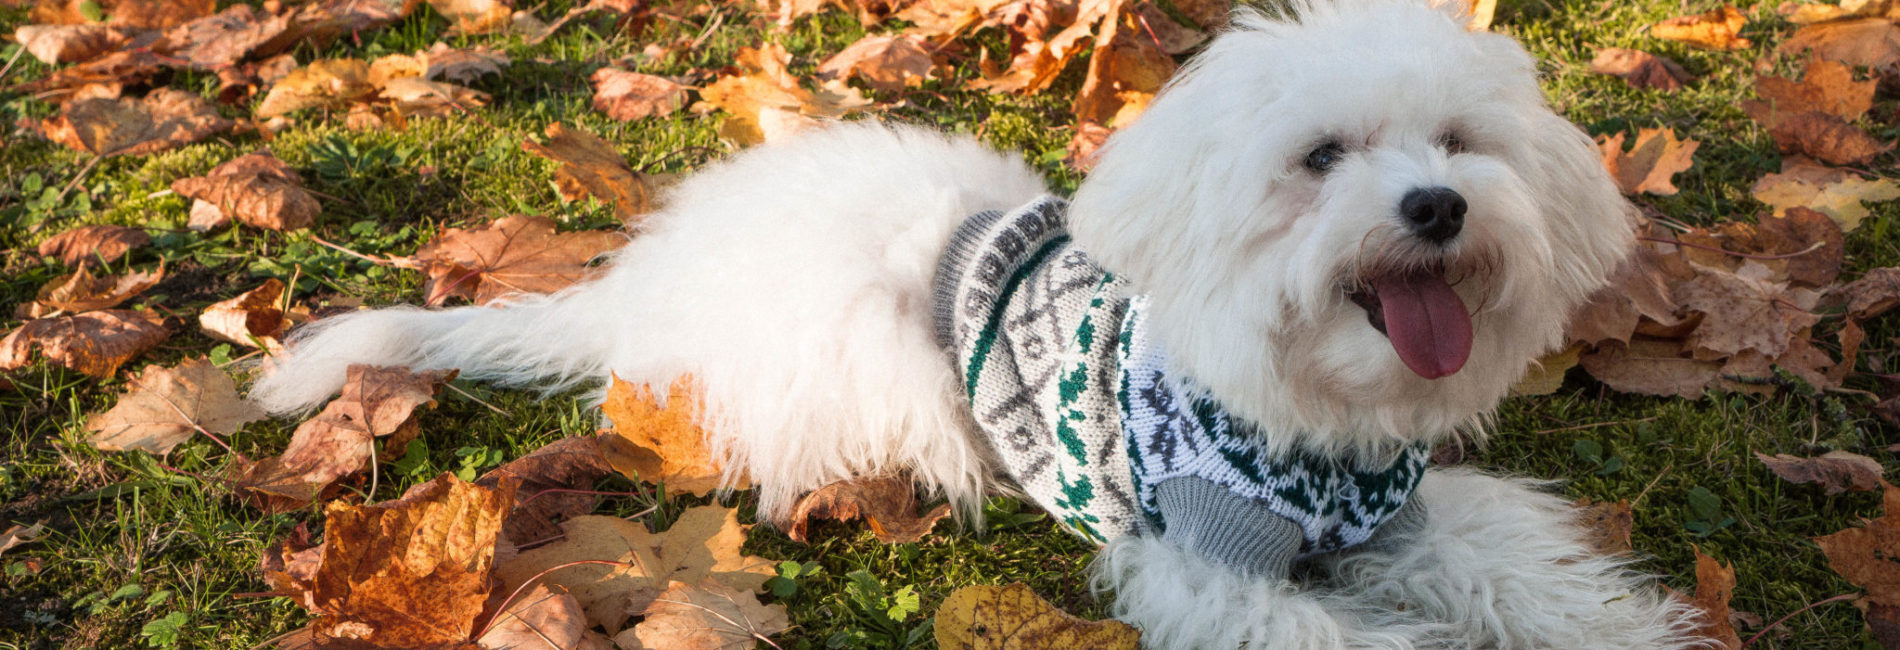 Arthemisclothing Auch Hunde tragen gerne Wolle Felinenanin